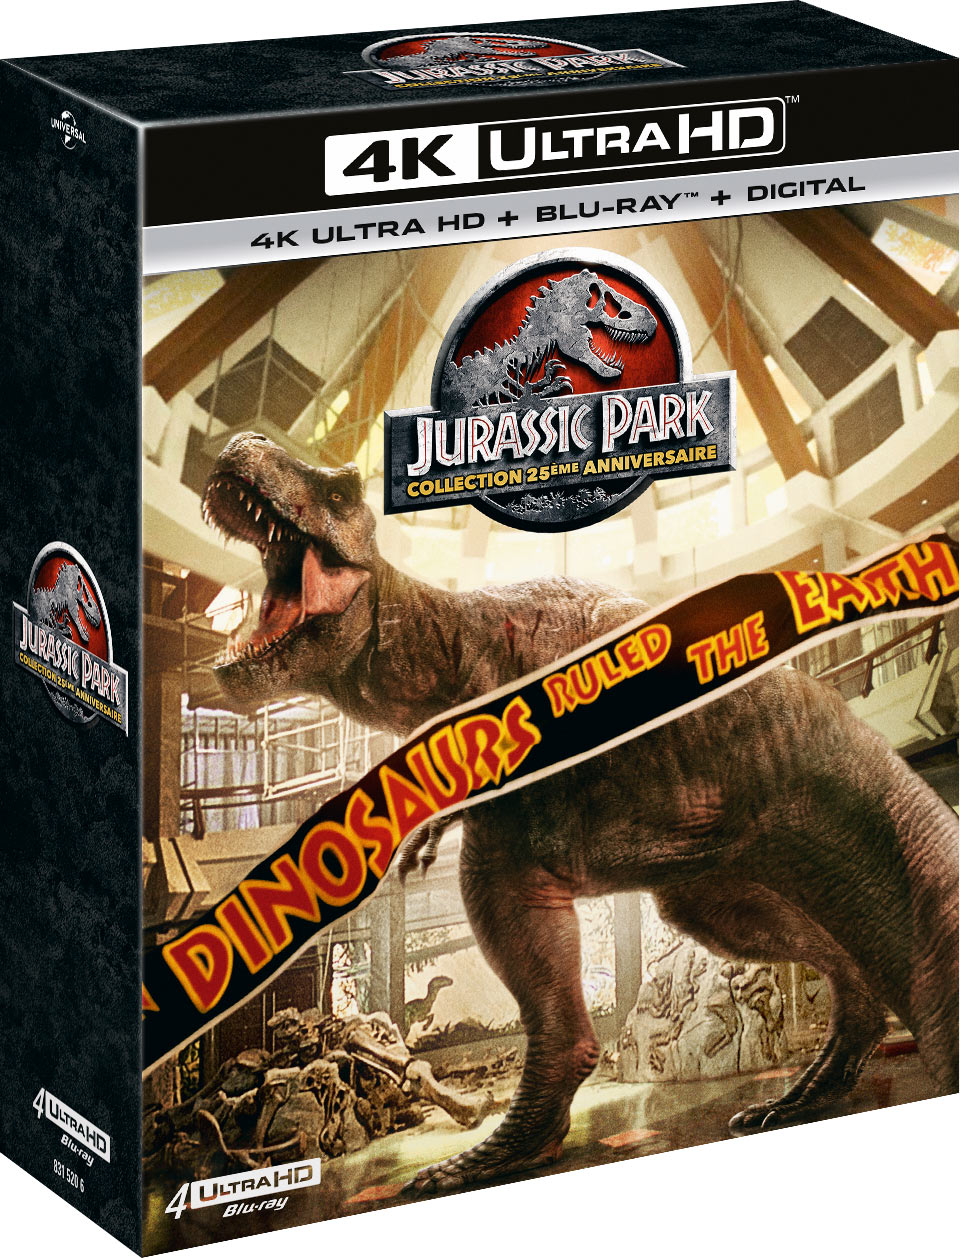 Jurassic Park - Collection 25ème anniversaire - 4K Ultra HD + Blu-ray + Digital